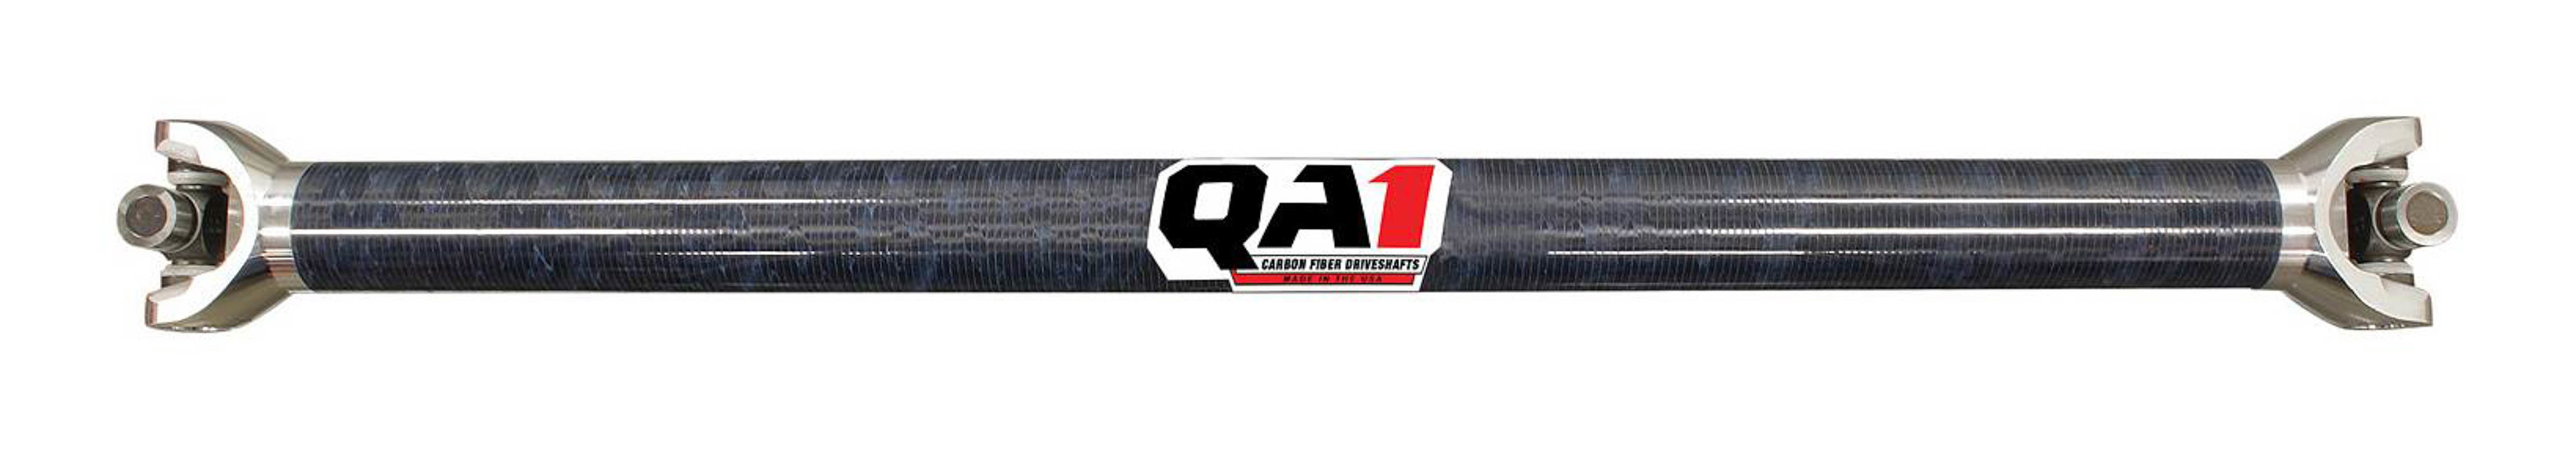 QA1 JJ-11223 Drive Shaft, Dirt Late Model, 39 in Long, 2.25 in OD, 1310 U-Joints, Carbon Fiber, Universal, Each